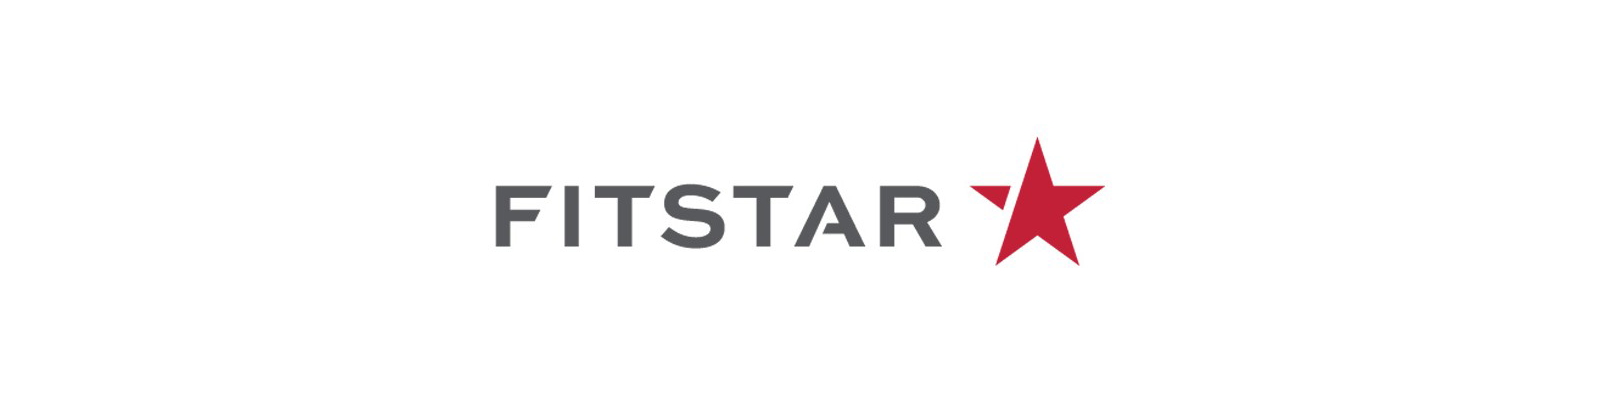 fitstar app cost development